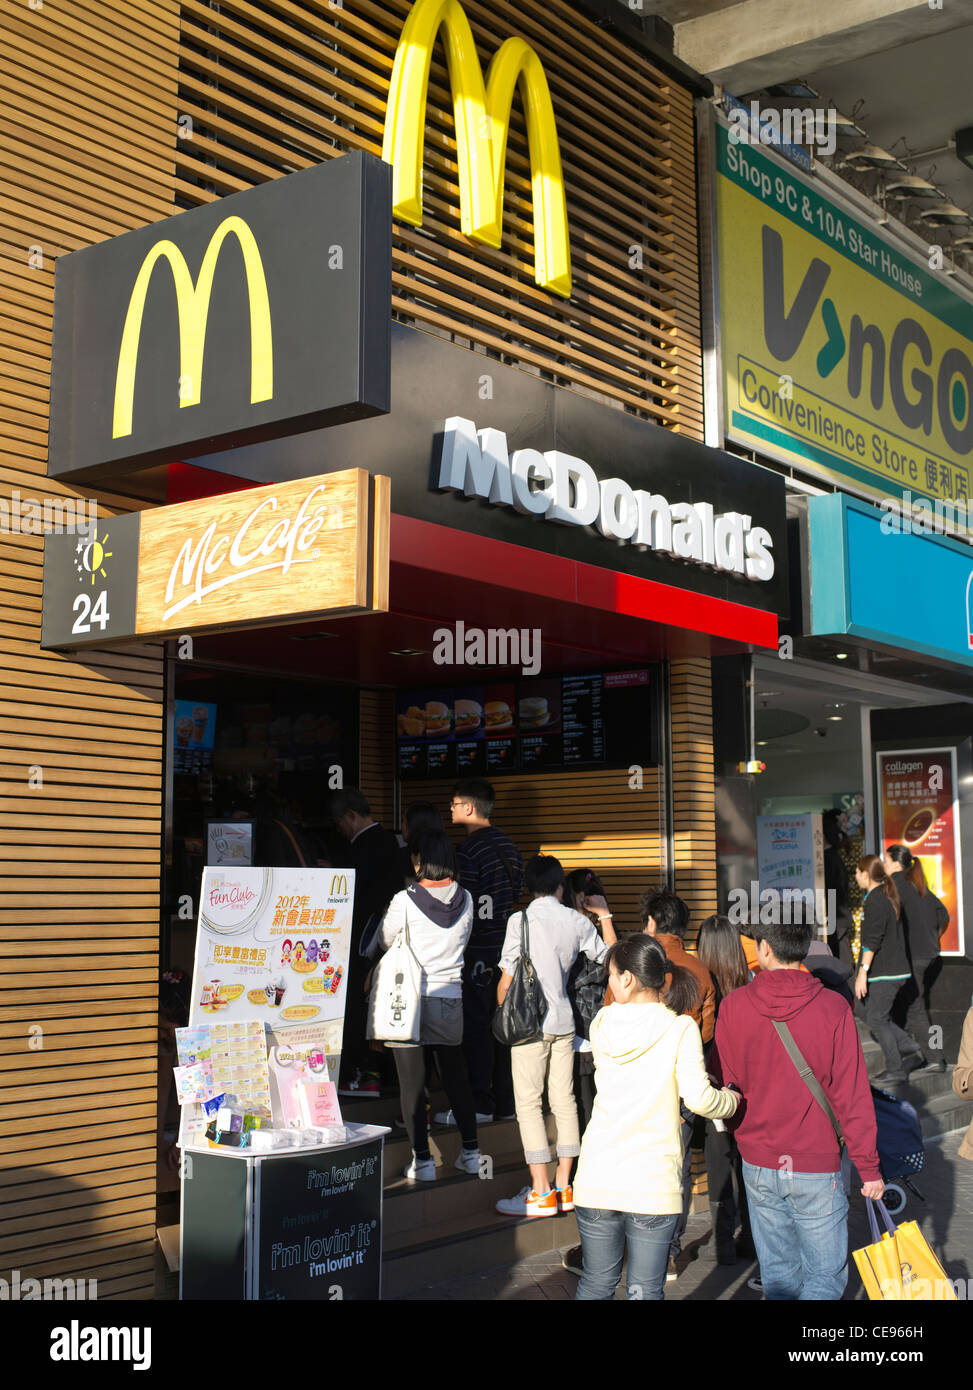 Dh McDonalds McCafe Tsim sha Tsui HONGKONG chinesische Jugendliche queuing Hamburger cafe Kowloon China fast food im Ausland Stockfoto